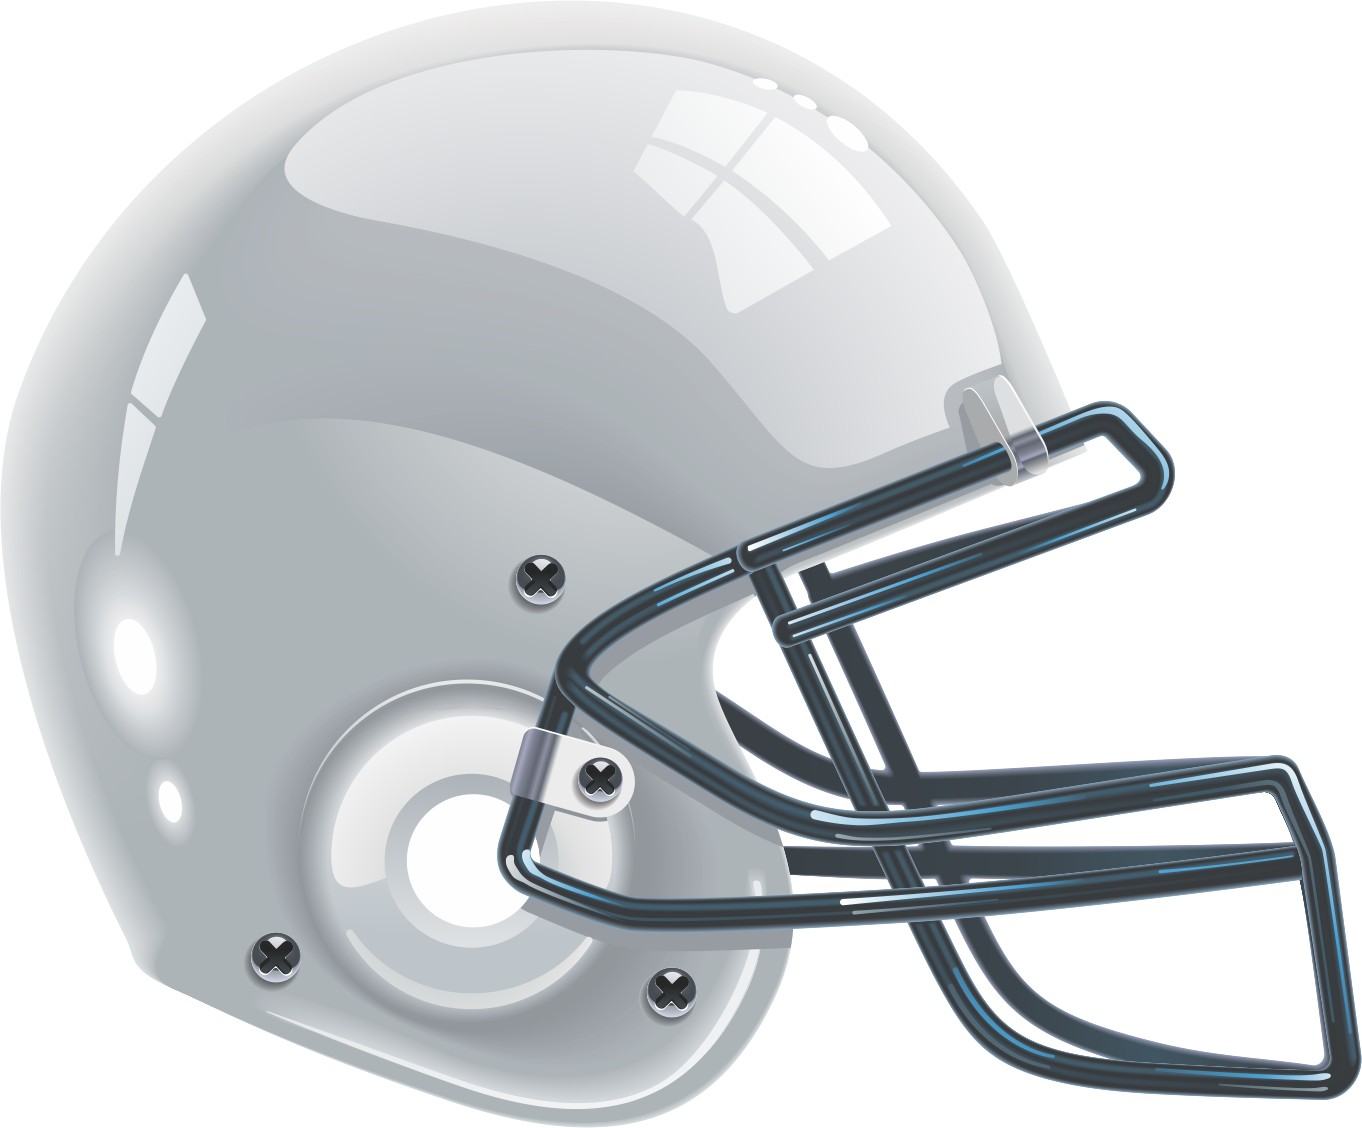 Football Helmet PNG Transparent Image